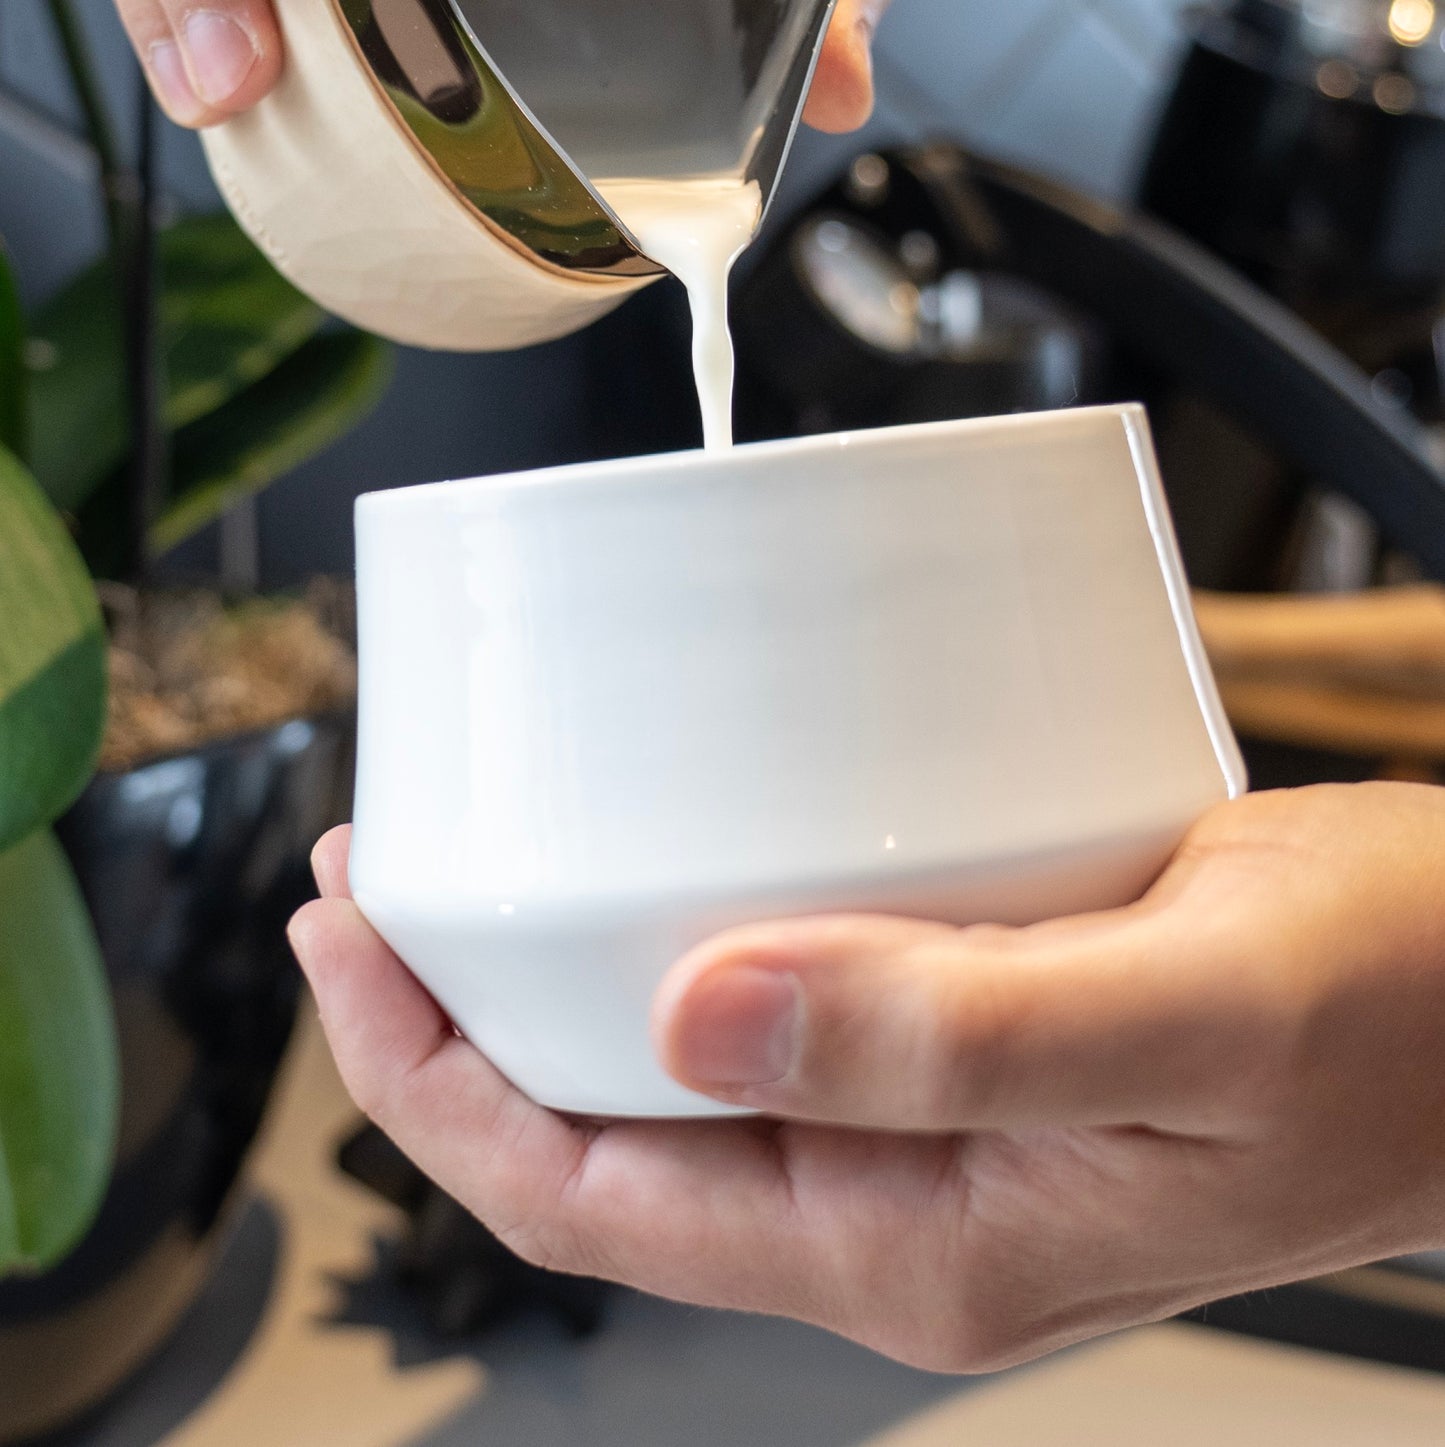 KRUVE Imagine Porcelain Latte Cups